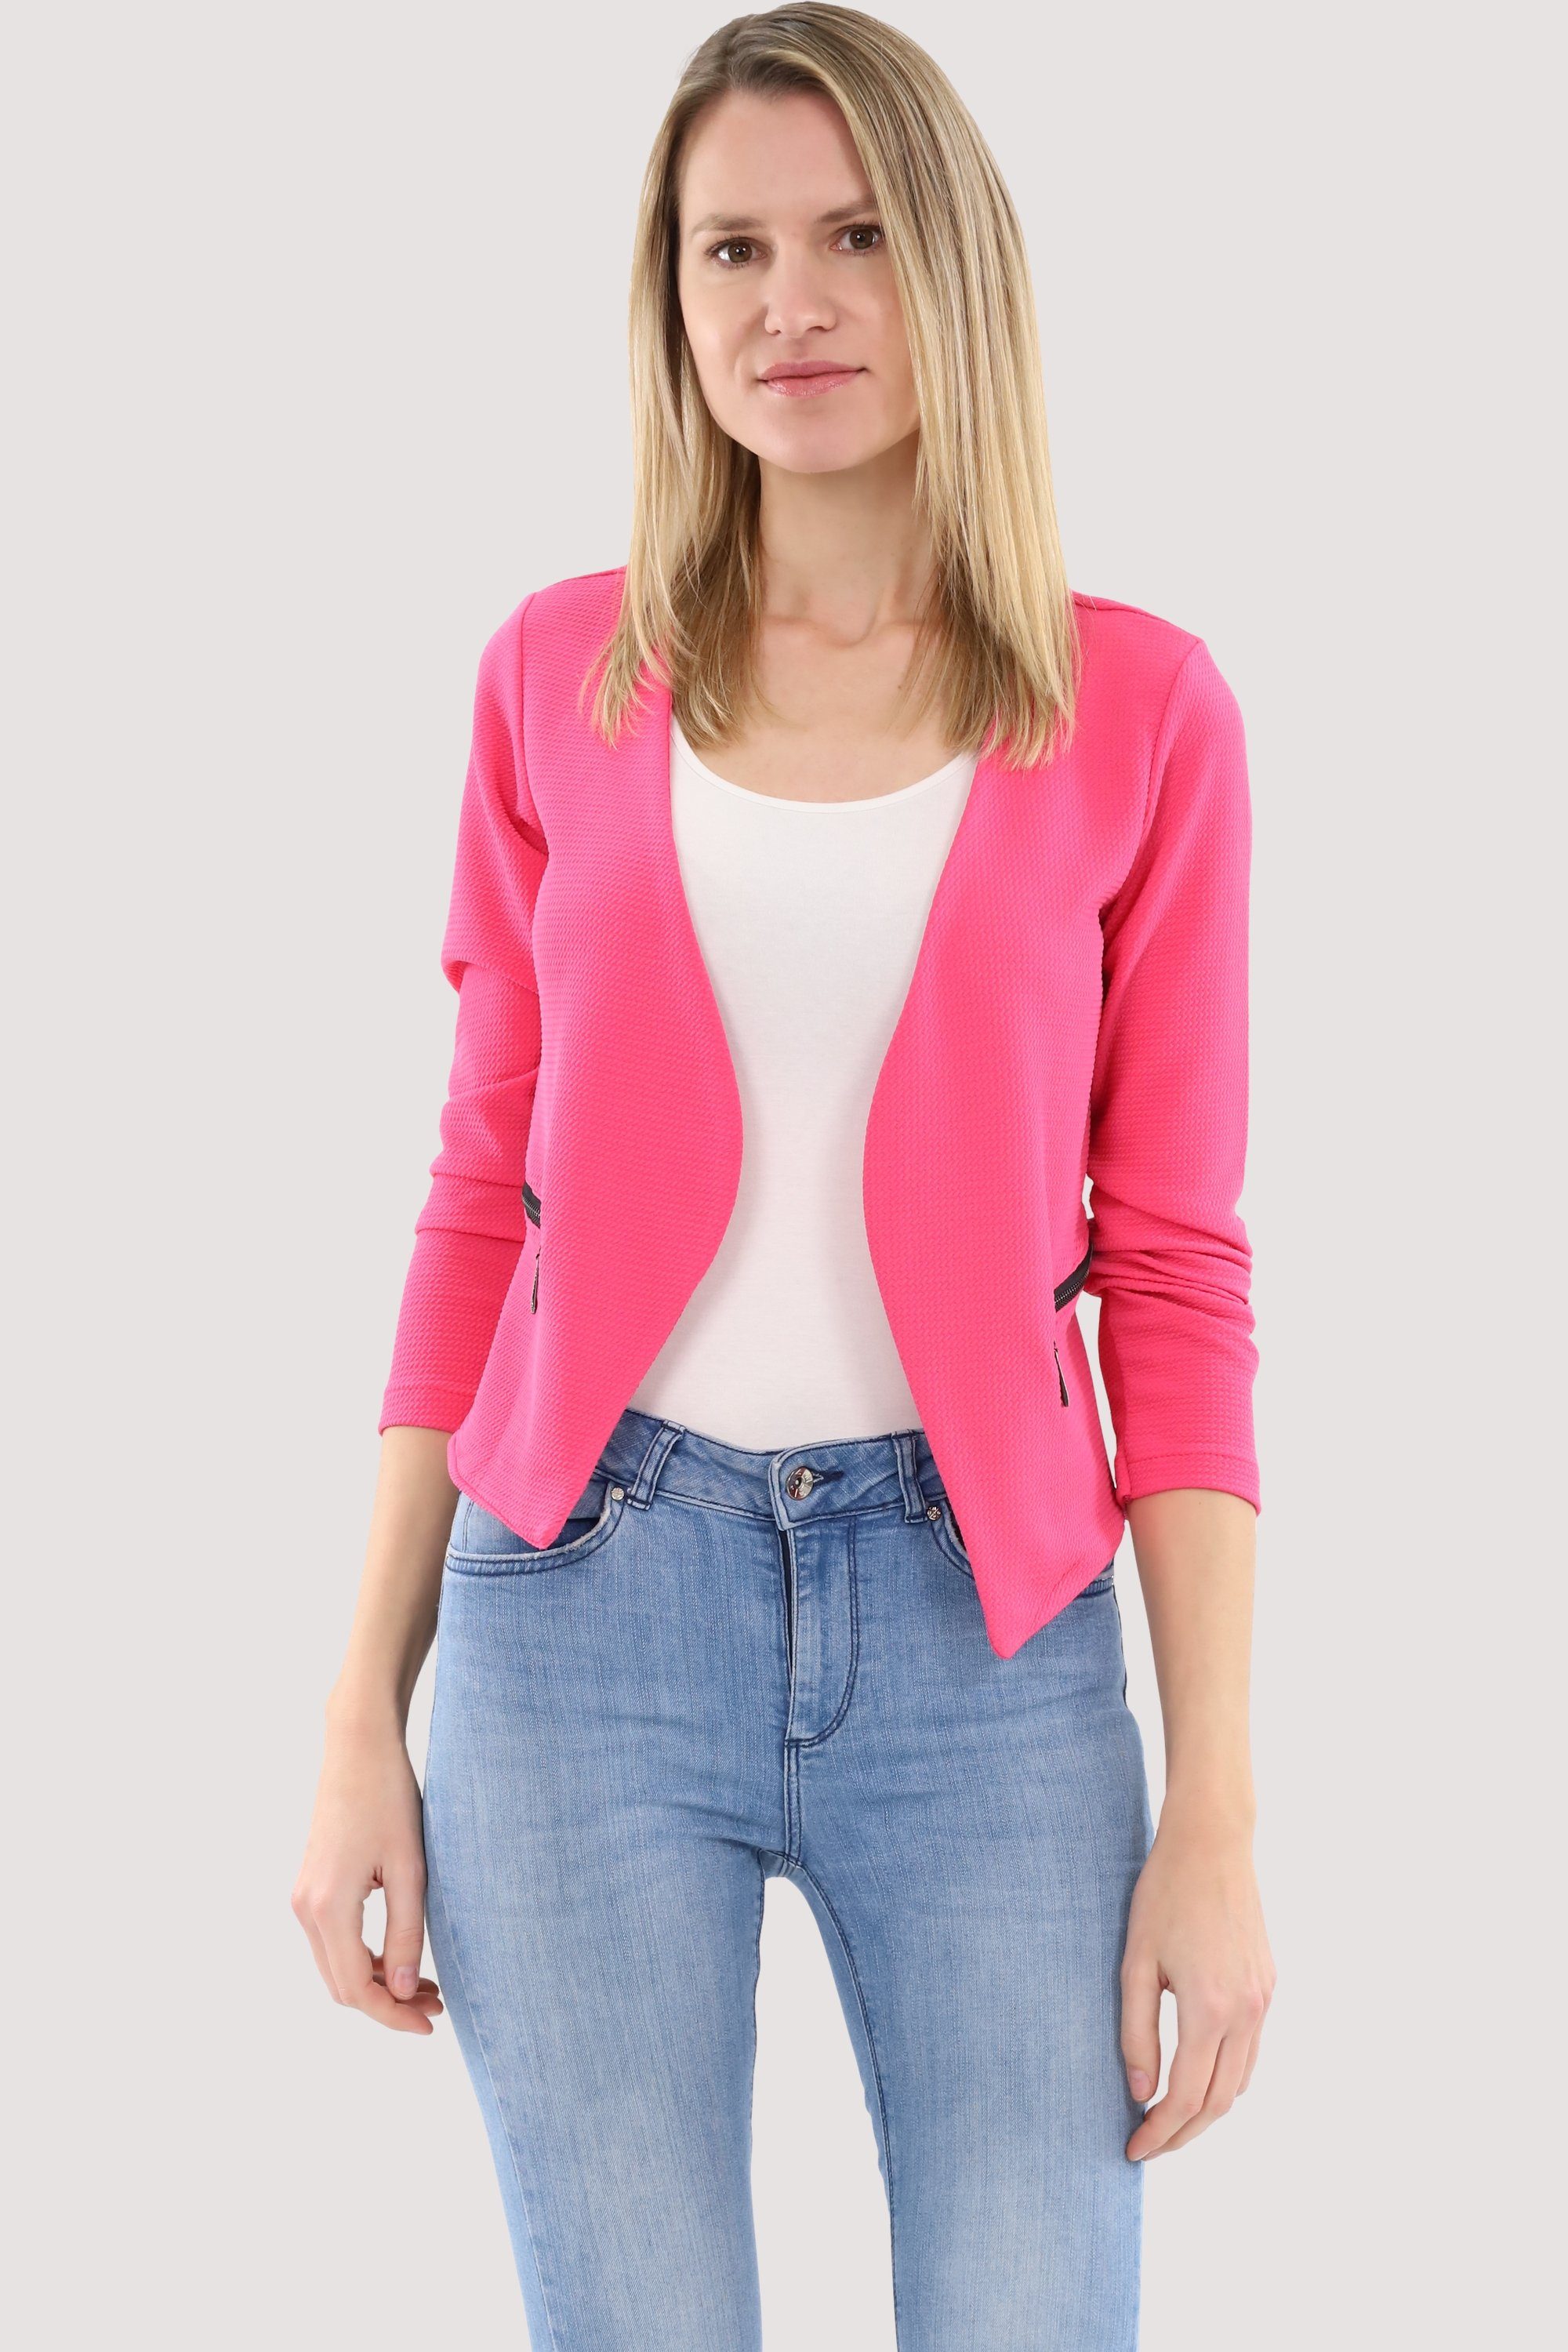 malito more than fashion Jackenblazer 6040 Sweatblazer im Basic-Look pink